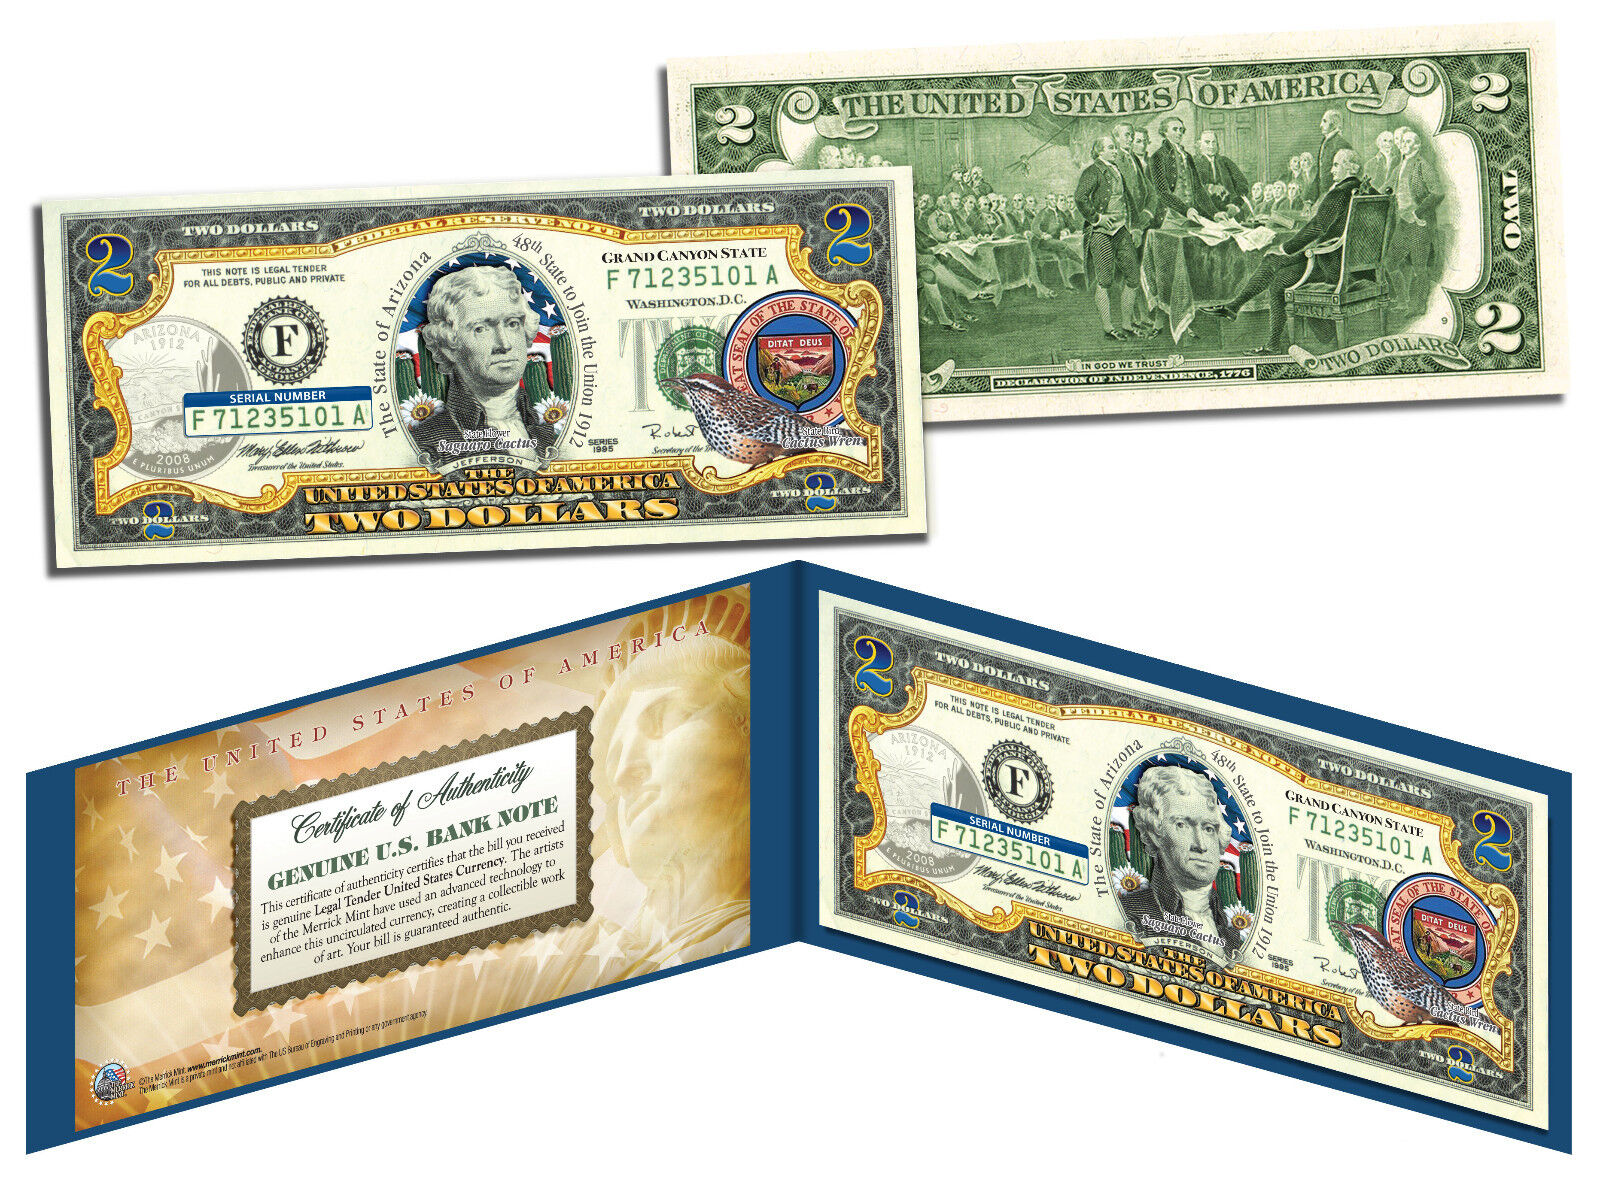 ARIZONA Statehood $2 Two-Dollar Colorized U.S. Bill AZ State *Legal Tender*